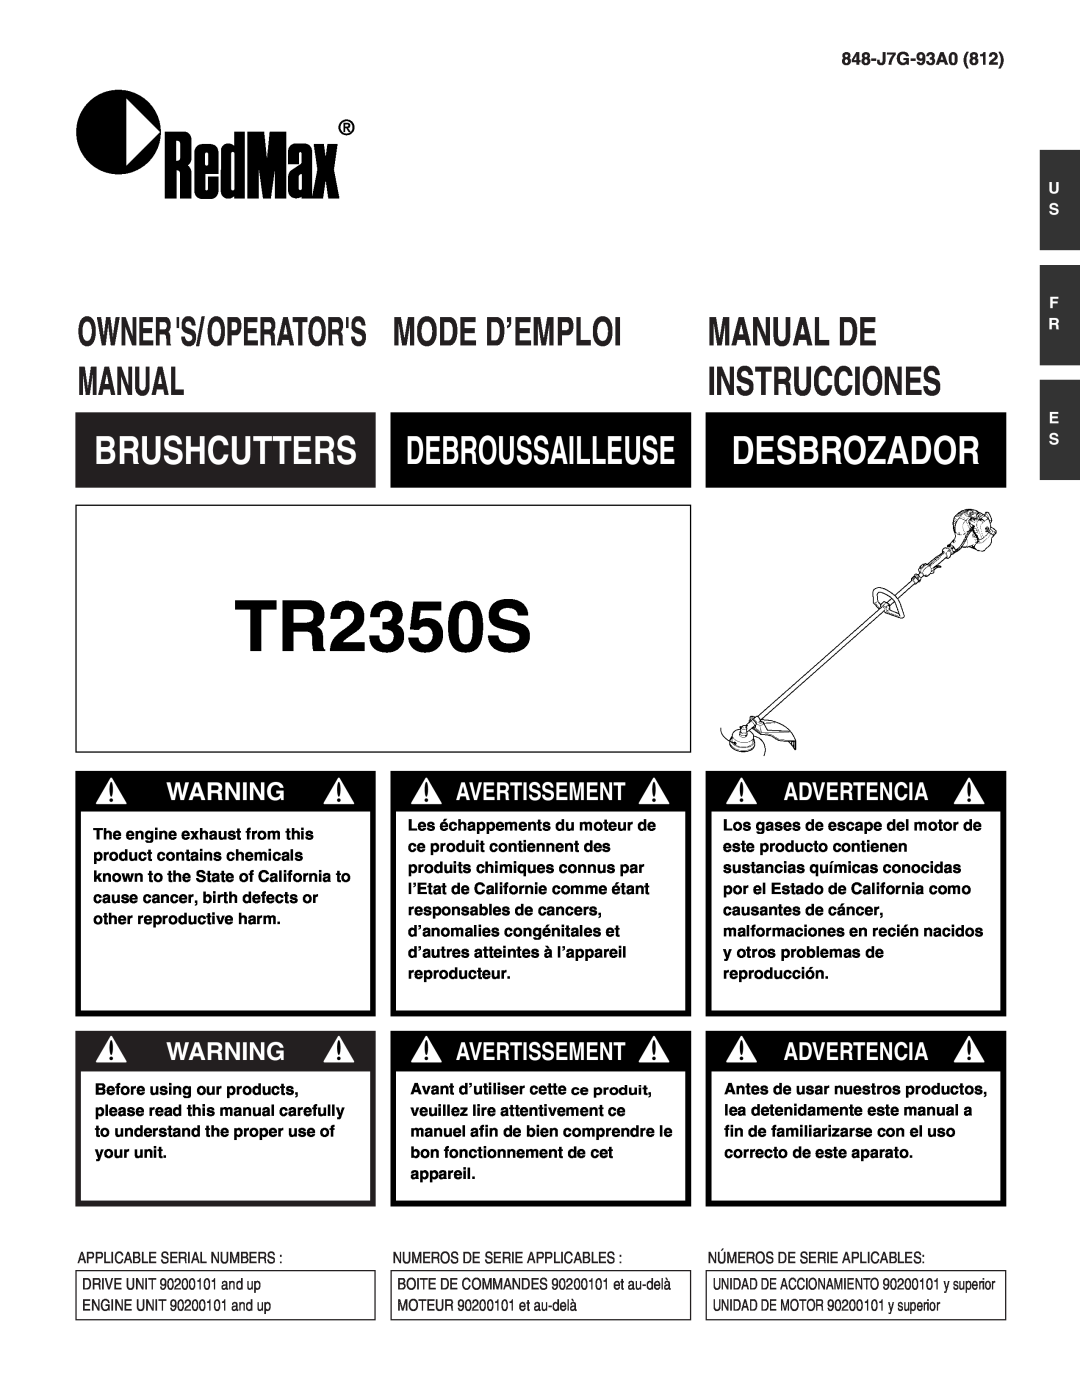 RedMax TR2350S manual Manual De, Desbrozador, Warningavertissement, Advertencia, Avertissement, 848-J7G-93A0812 